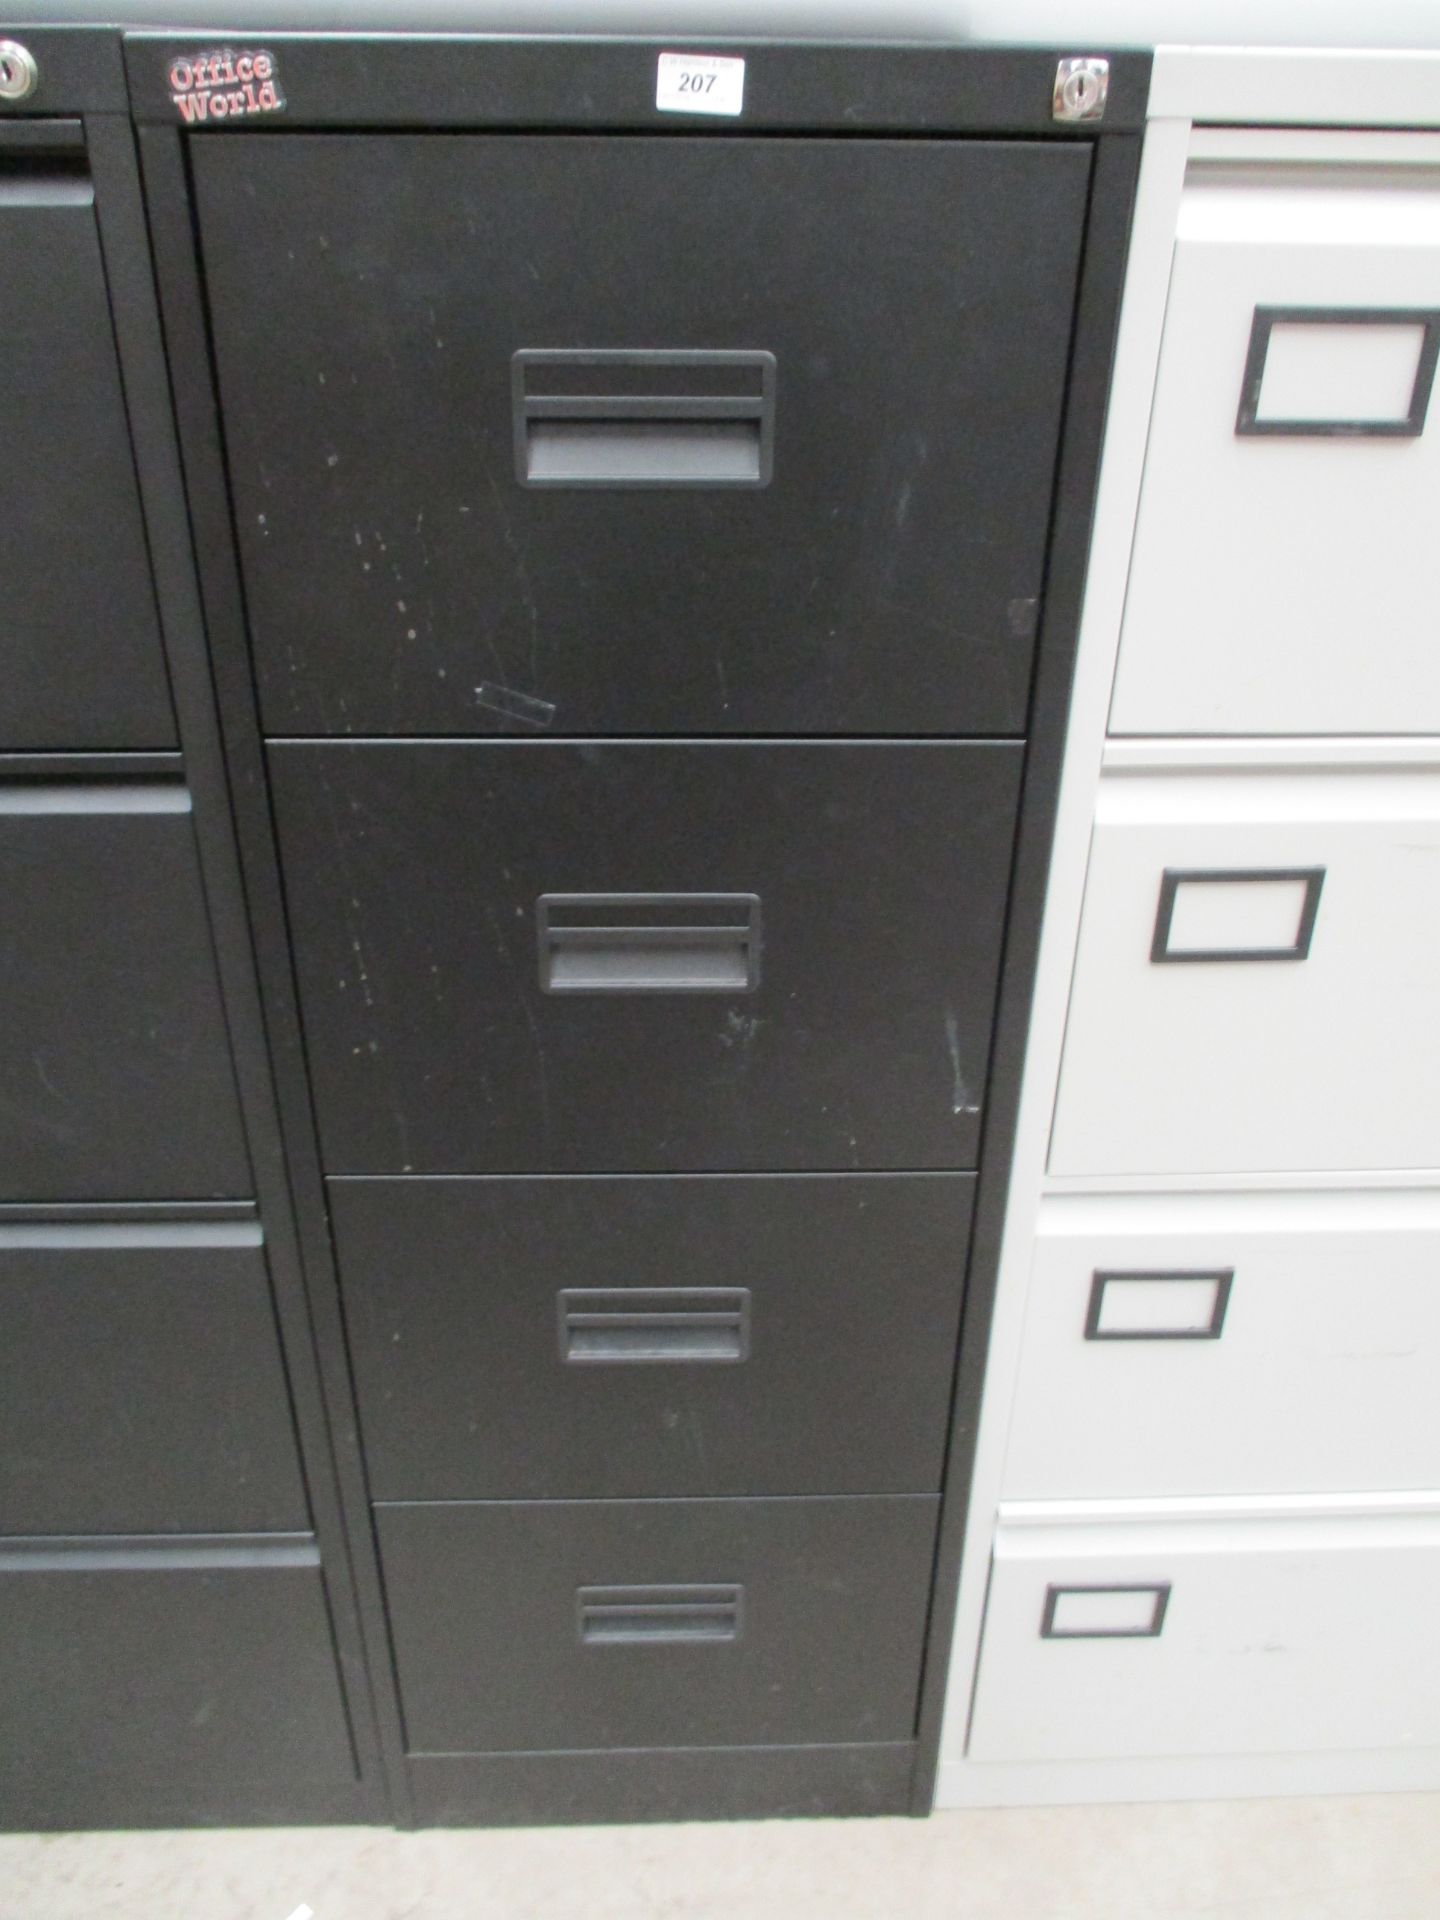 Office World black metal four drawer filing cabinet (unlocked no key)